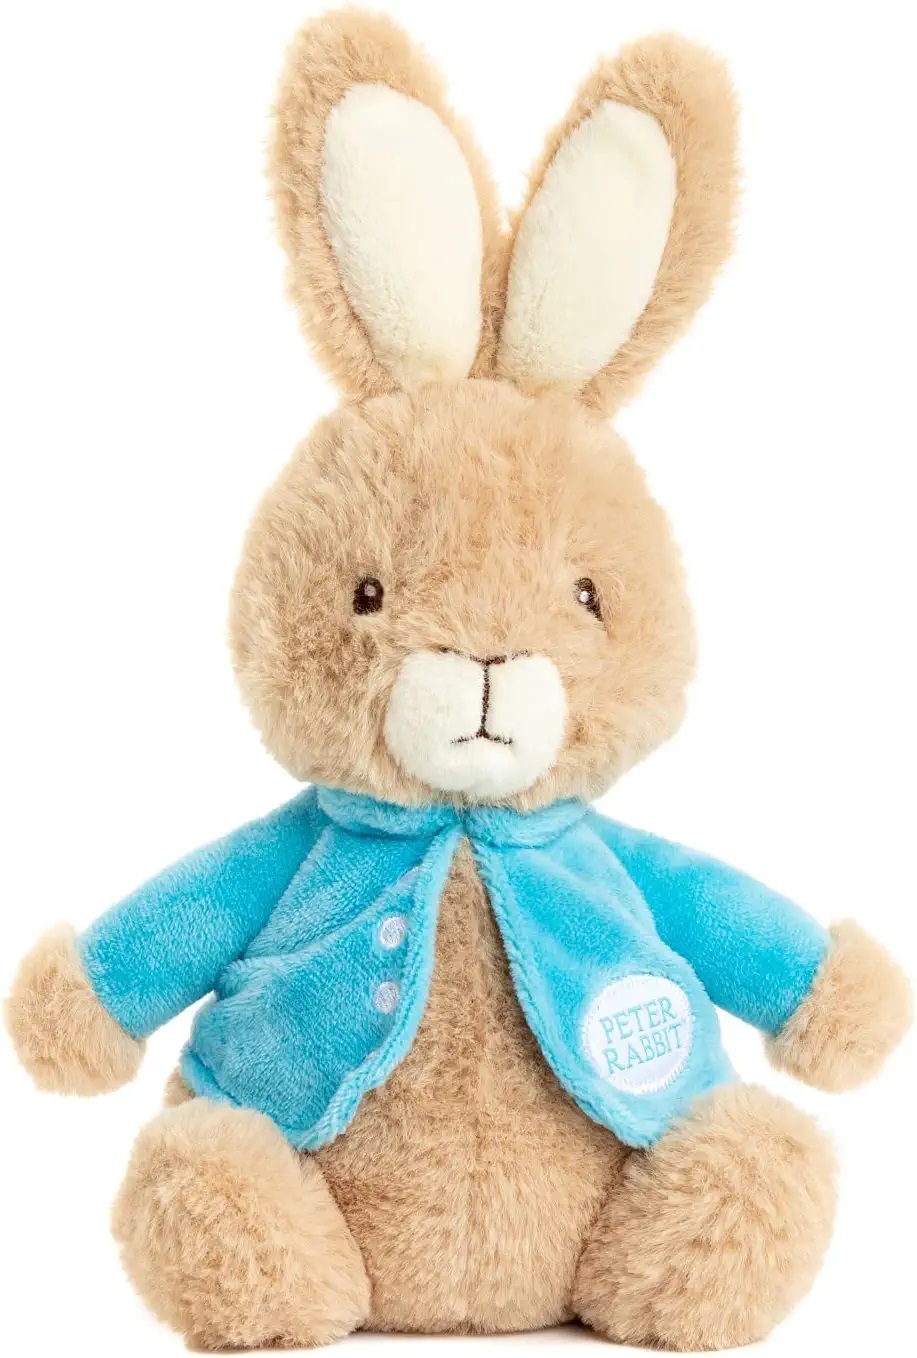 Peter Rabbit Stuffed Animal Plush $7.49